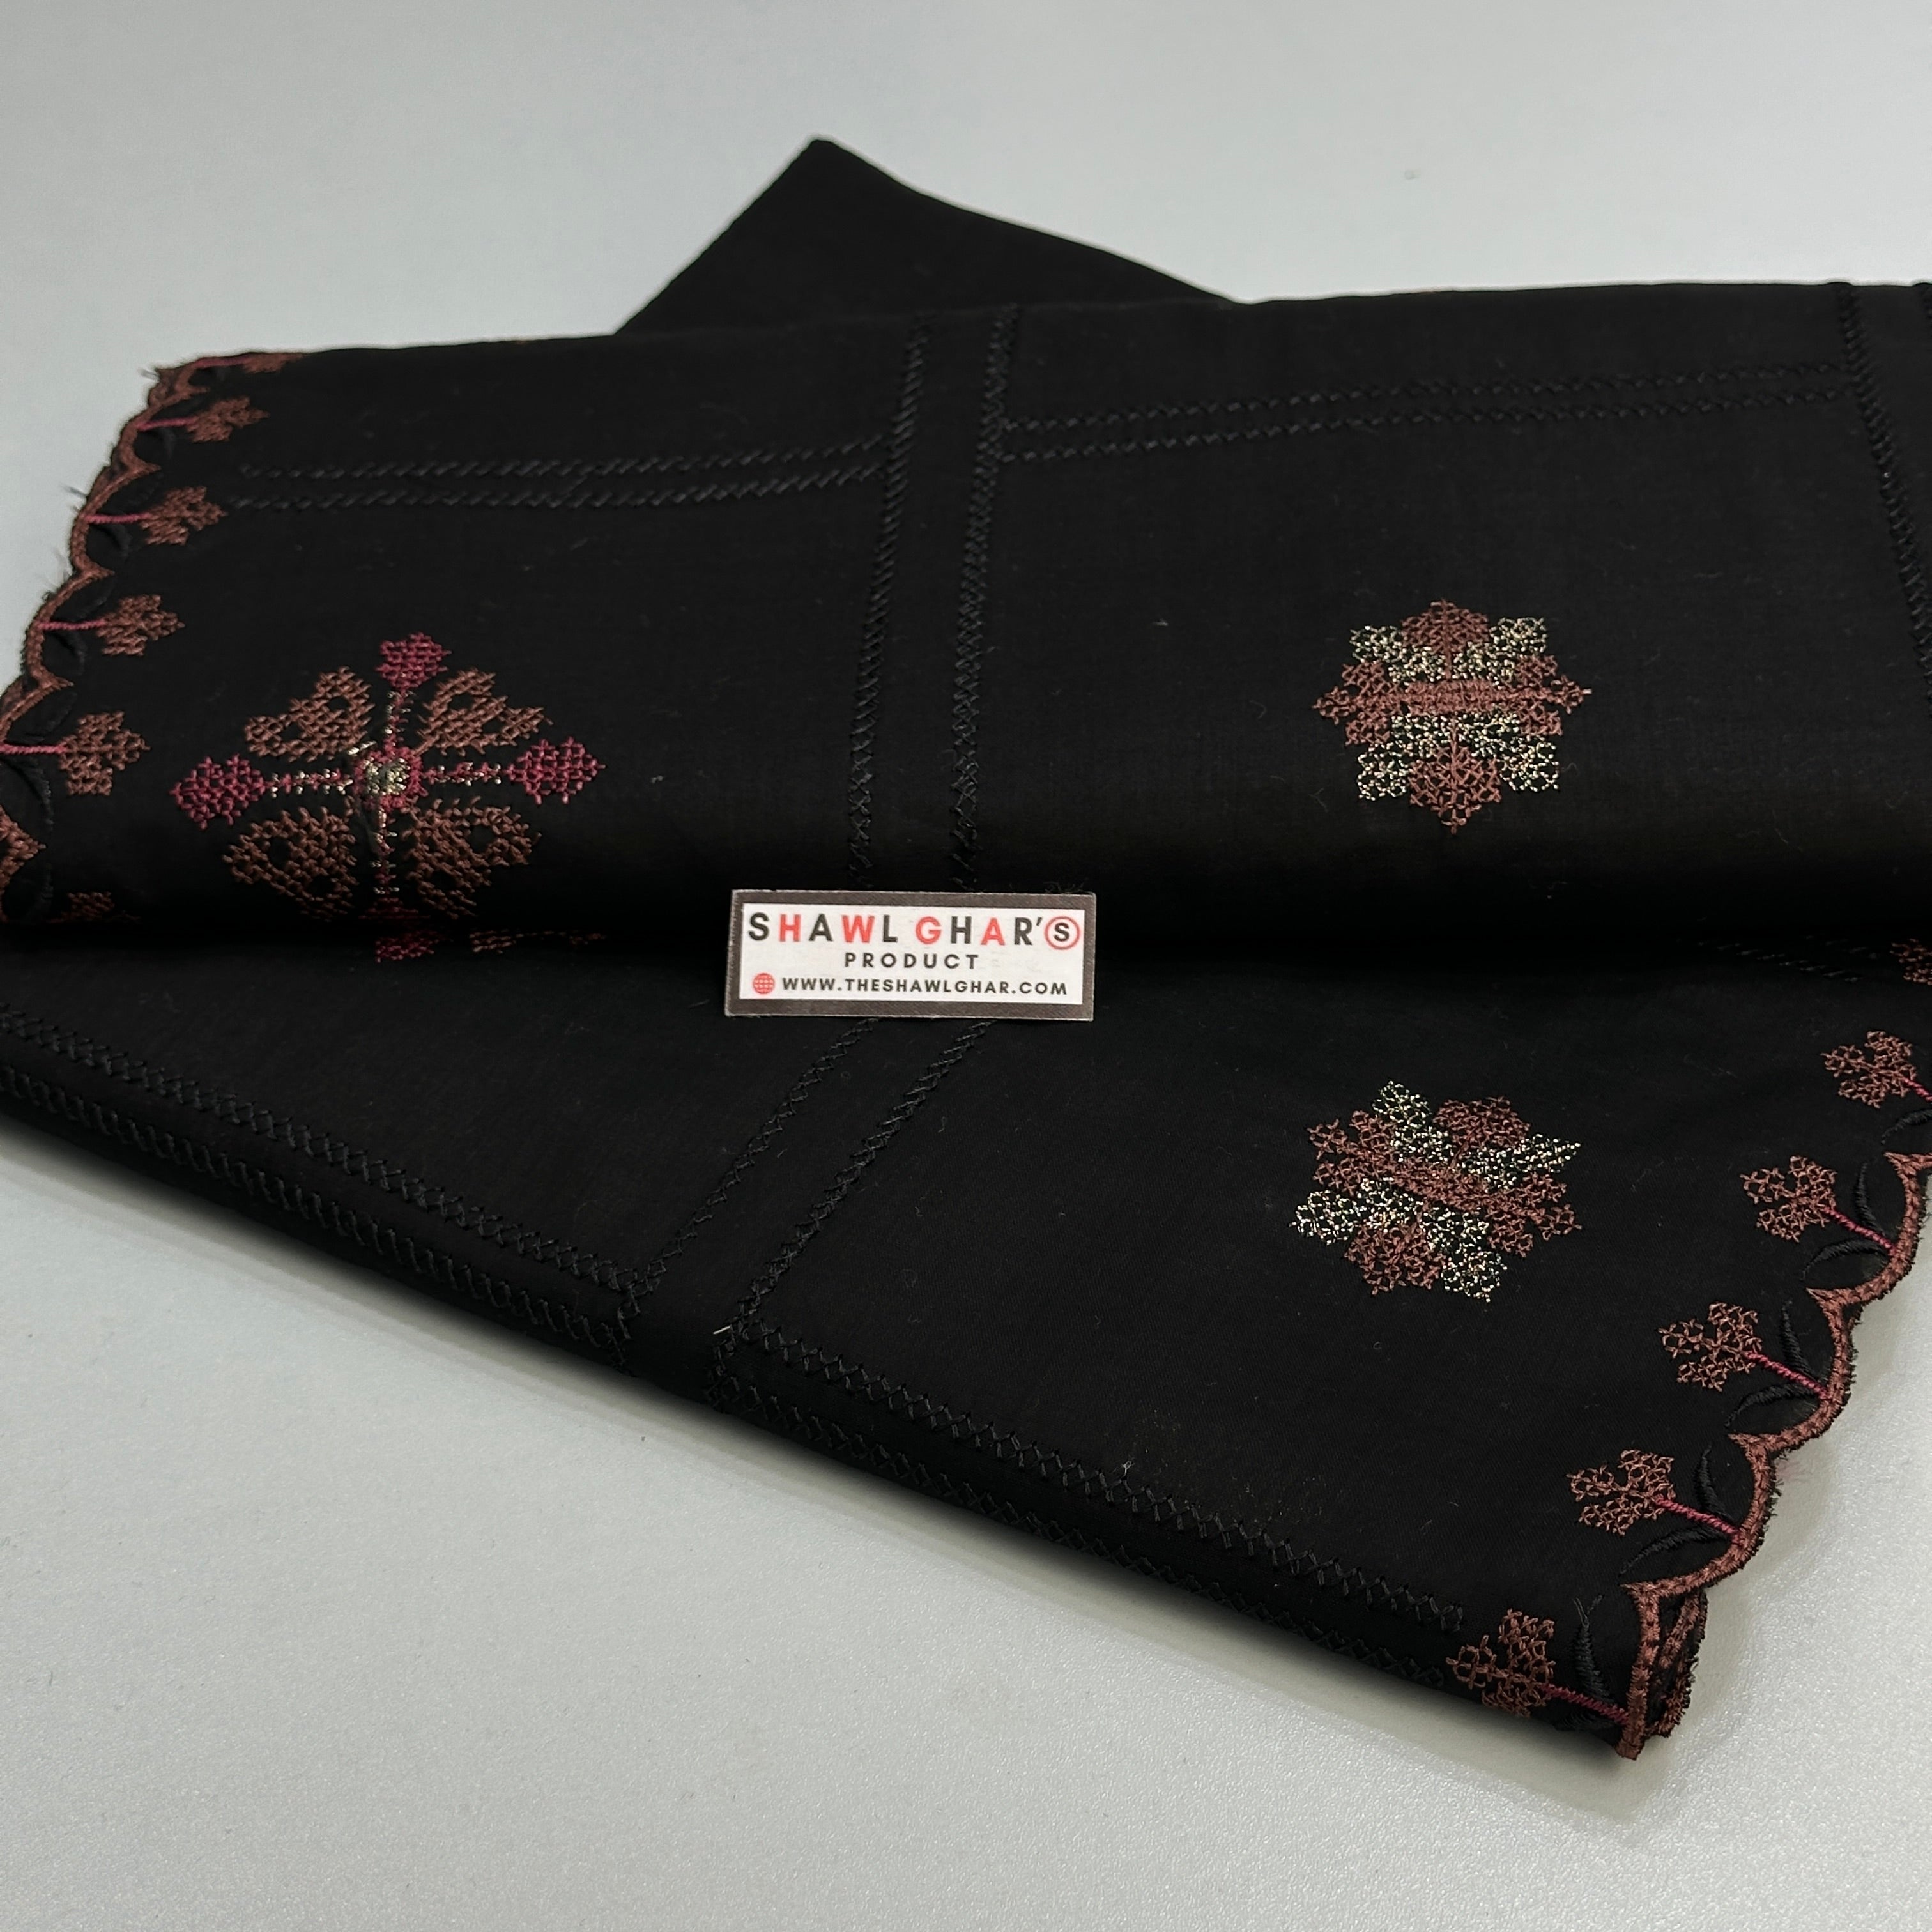 Checkered Embroidery Lawn Shawl - Black